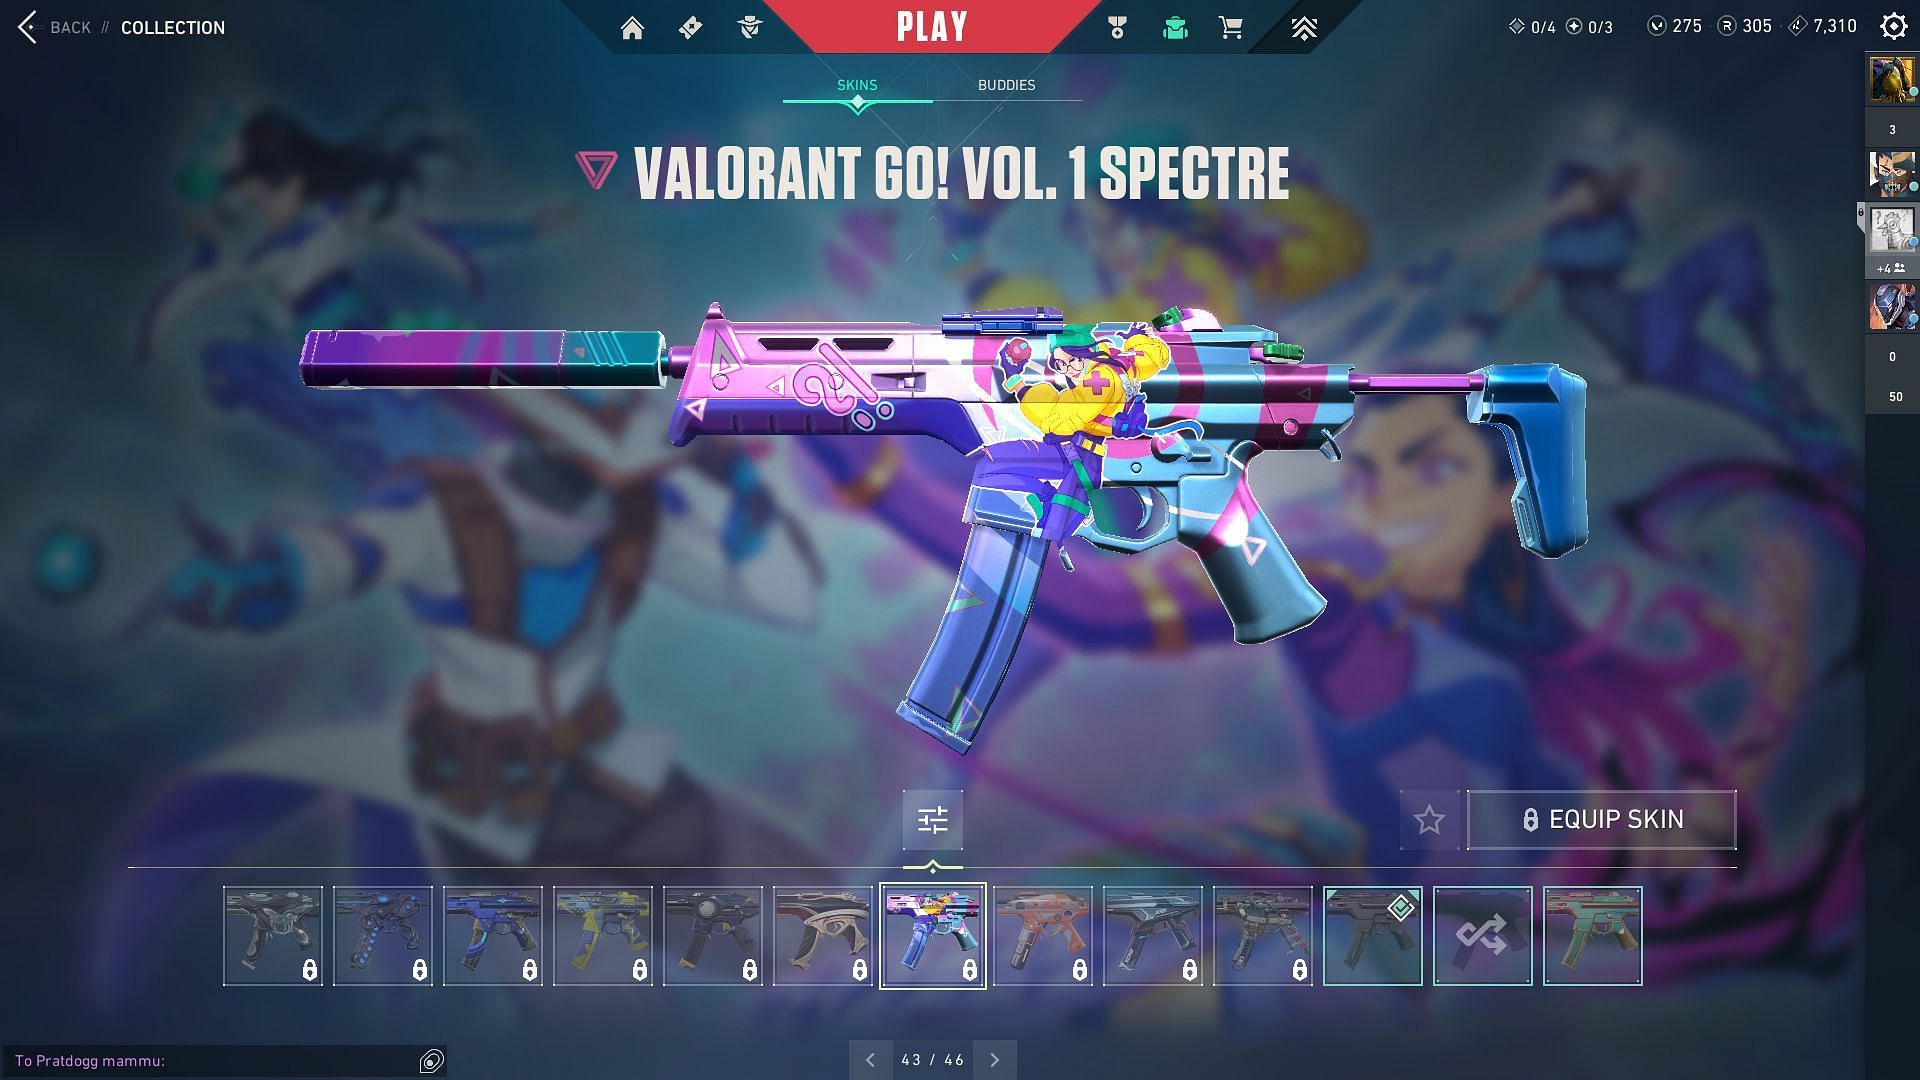 Valorant GO! Vol. 1 Spectre (Image via Sportskeeda and Riot Games)